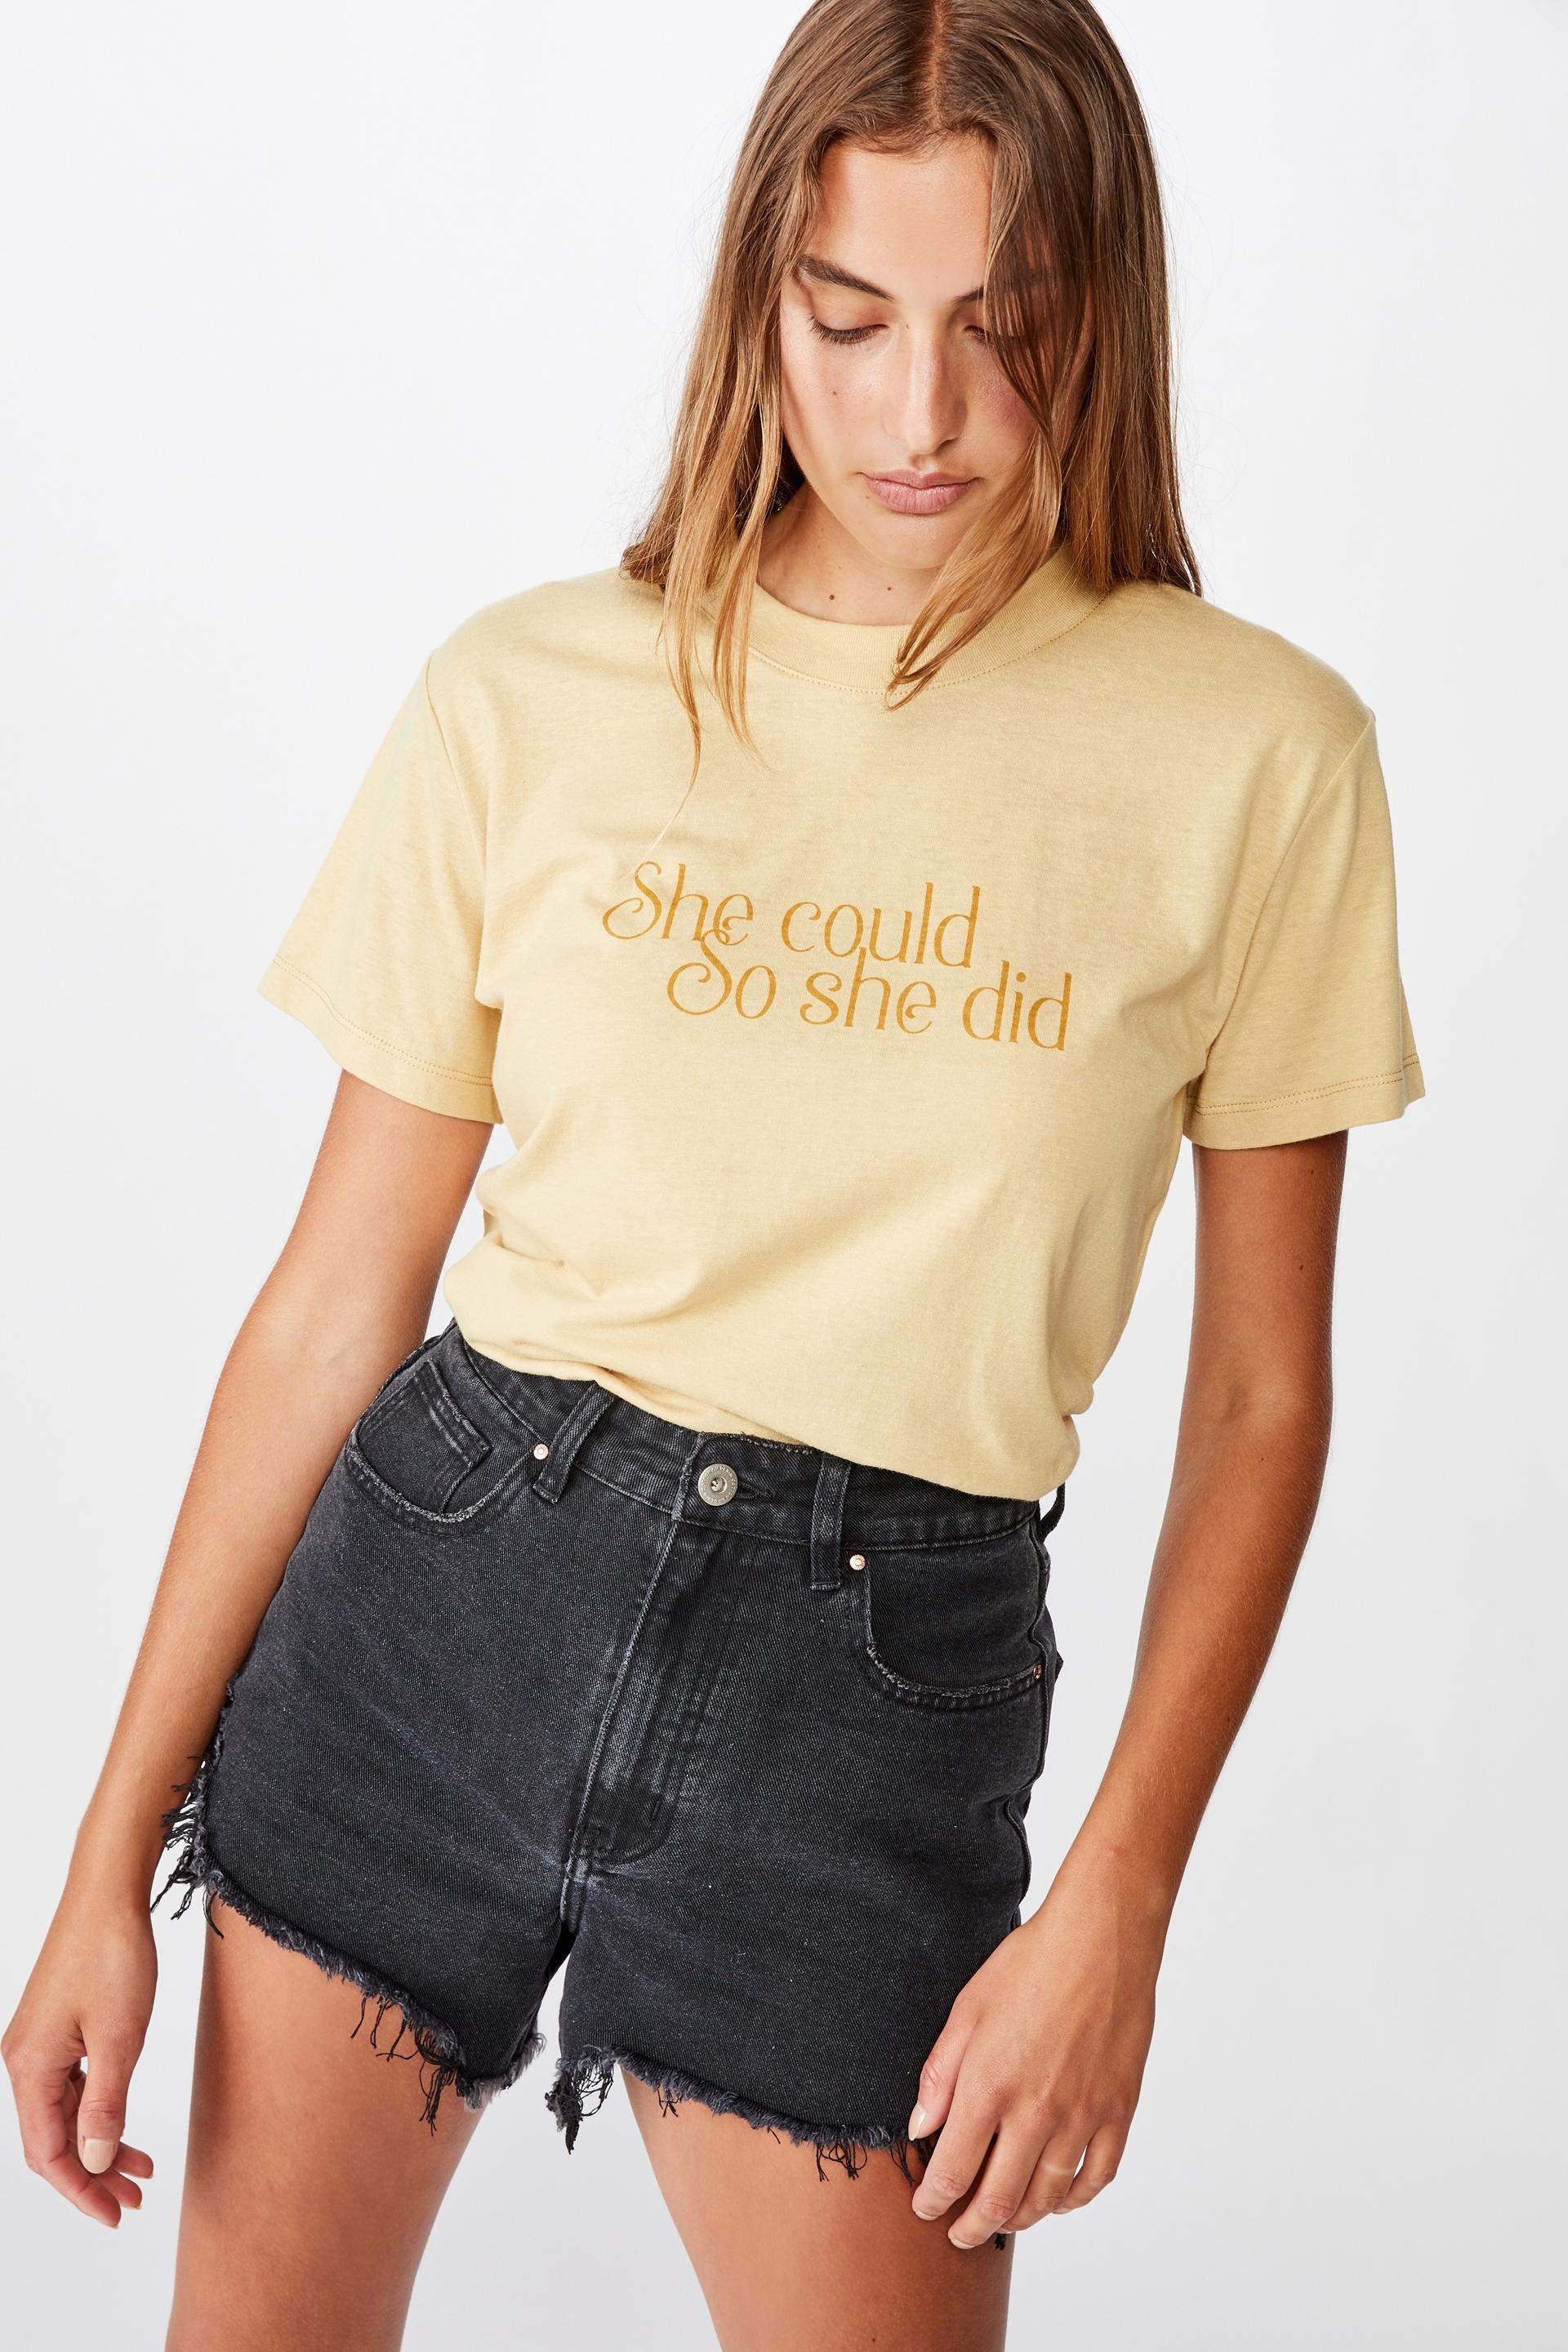 Classic slogan t shirt she did - new heat Cotton On T-Shirts, Vests ...